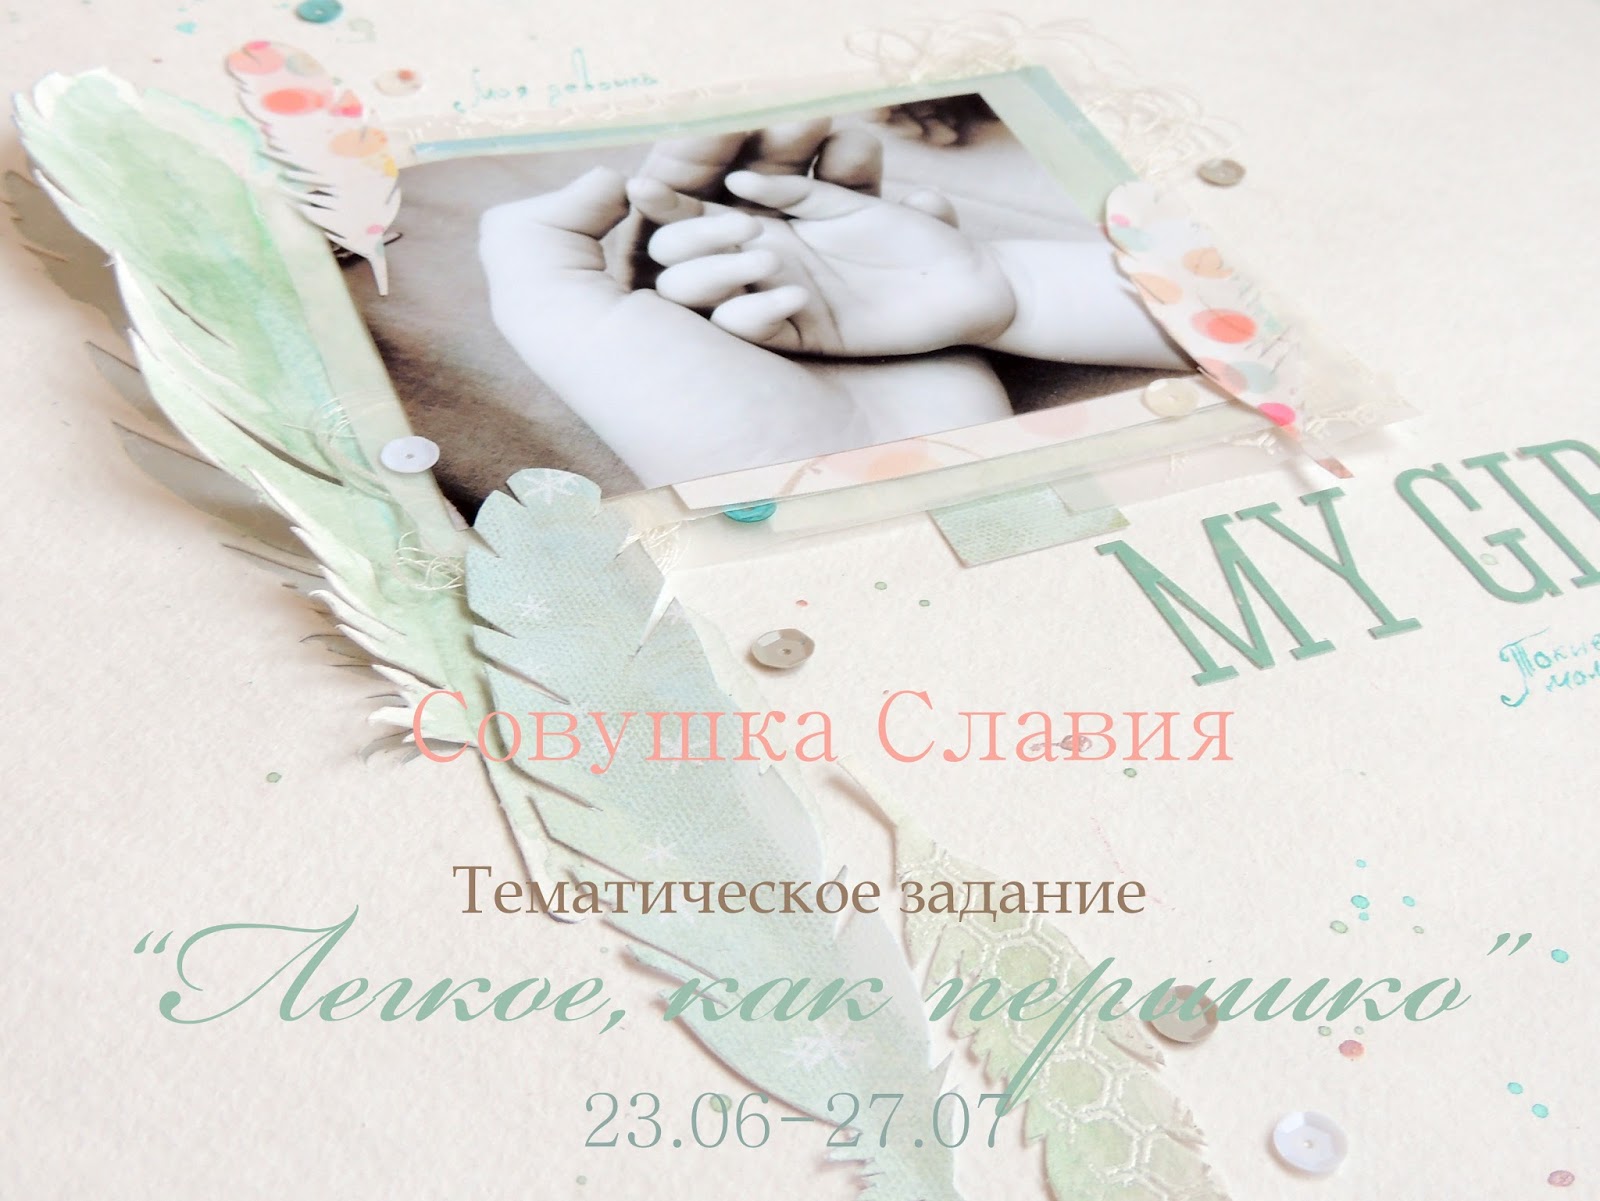 http://sovushkaslavia.blogspot.ru/2014/06/blog-post_23.html